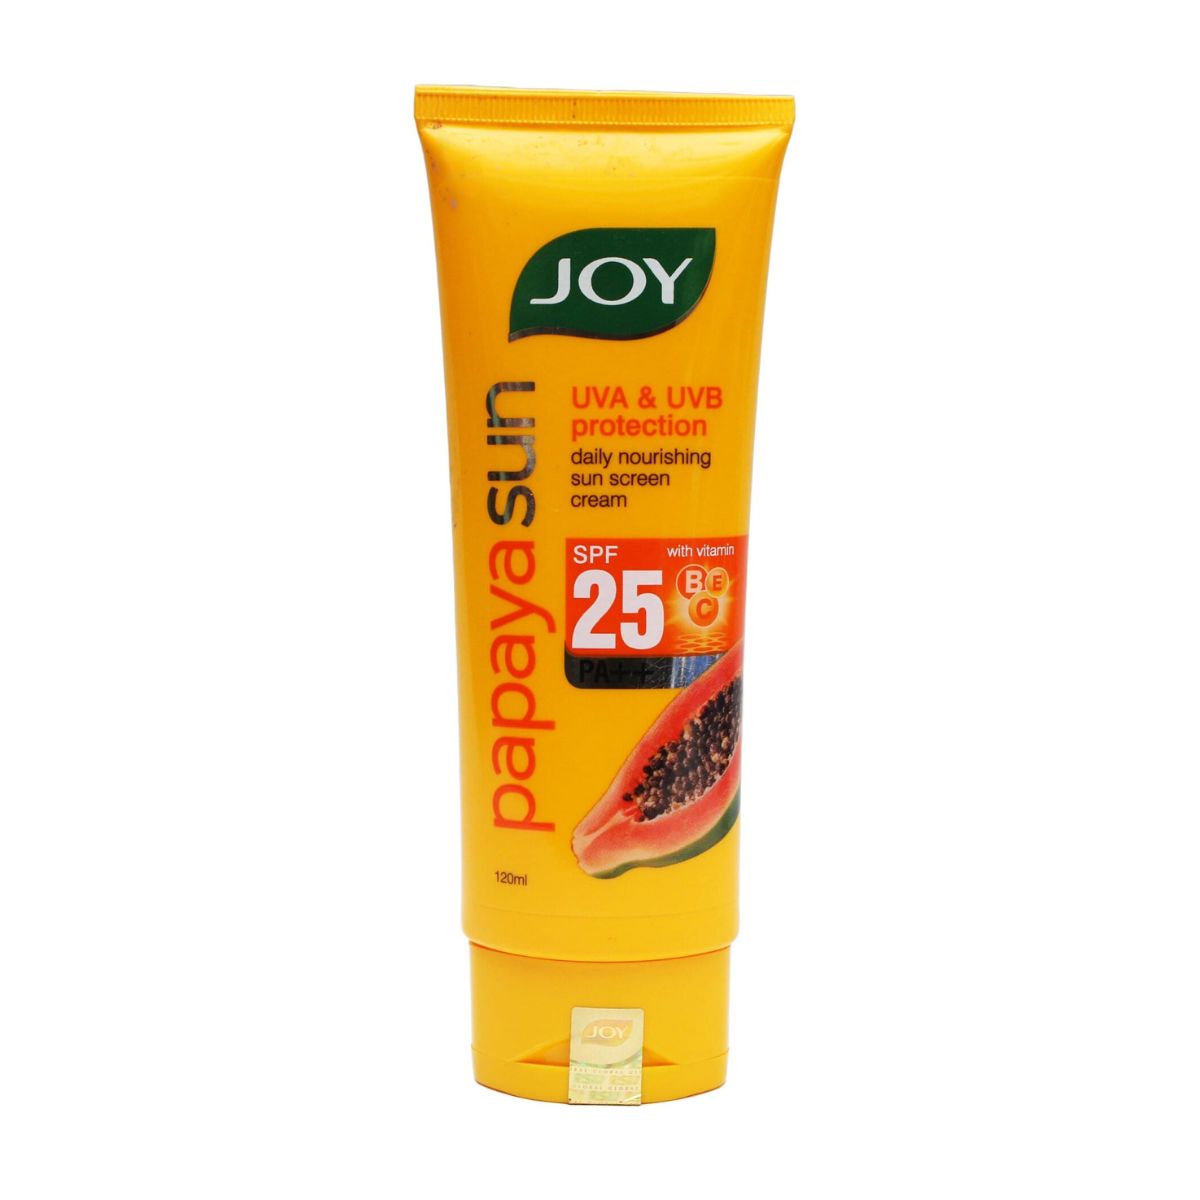 Joy Papaya Sunscreen - UVA & UVB Protection - Daily Nourishing Sunscreen - PA++ SPF 25 - 120ml